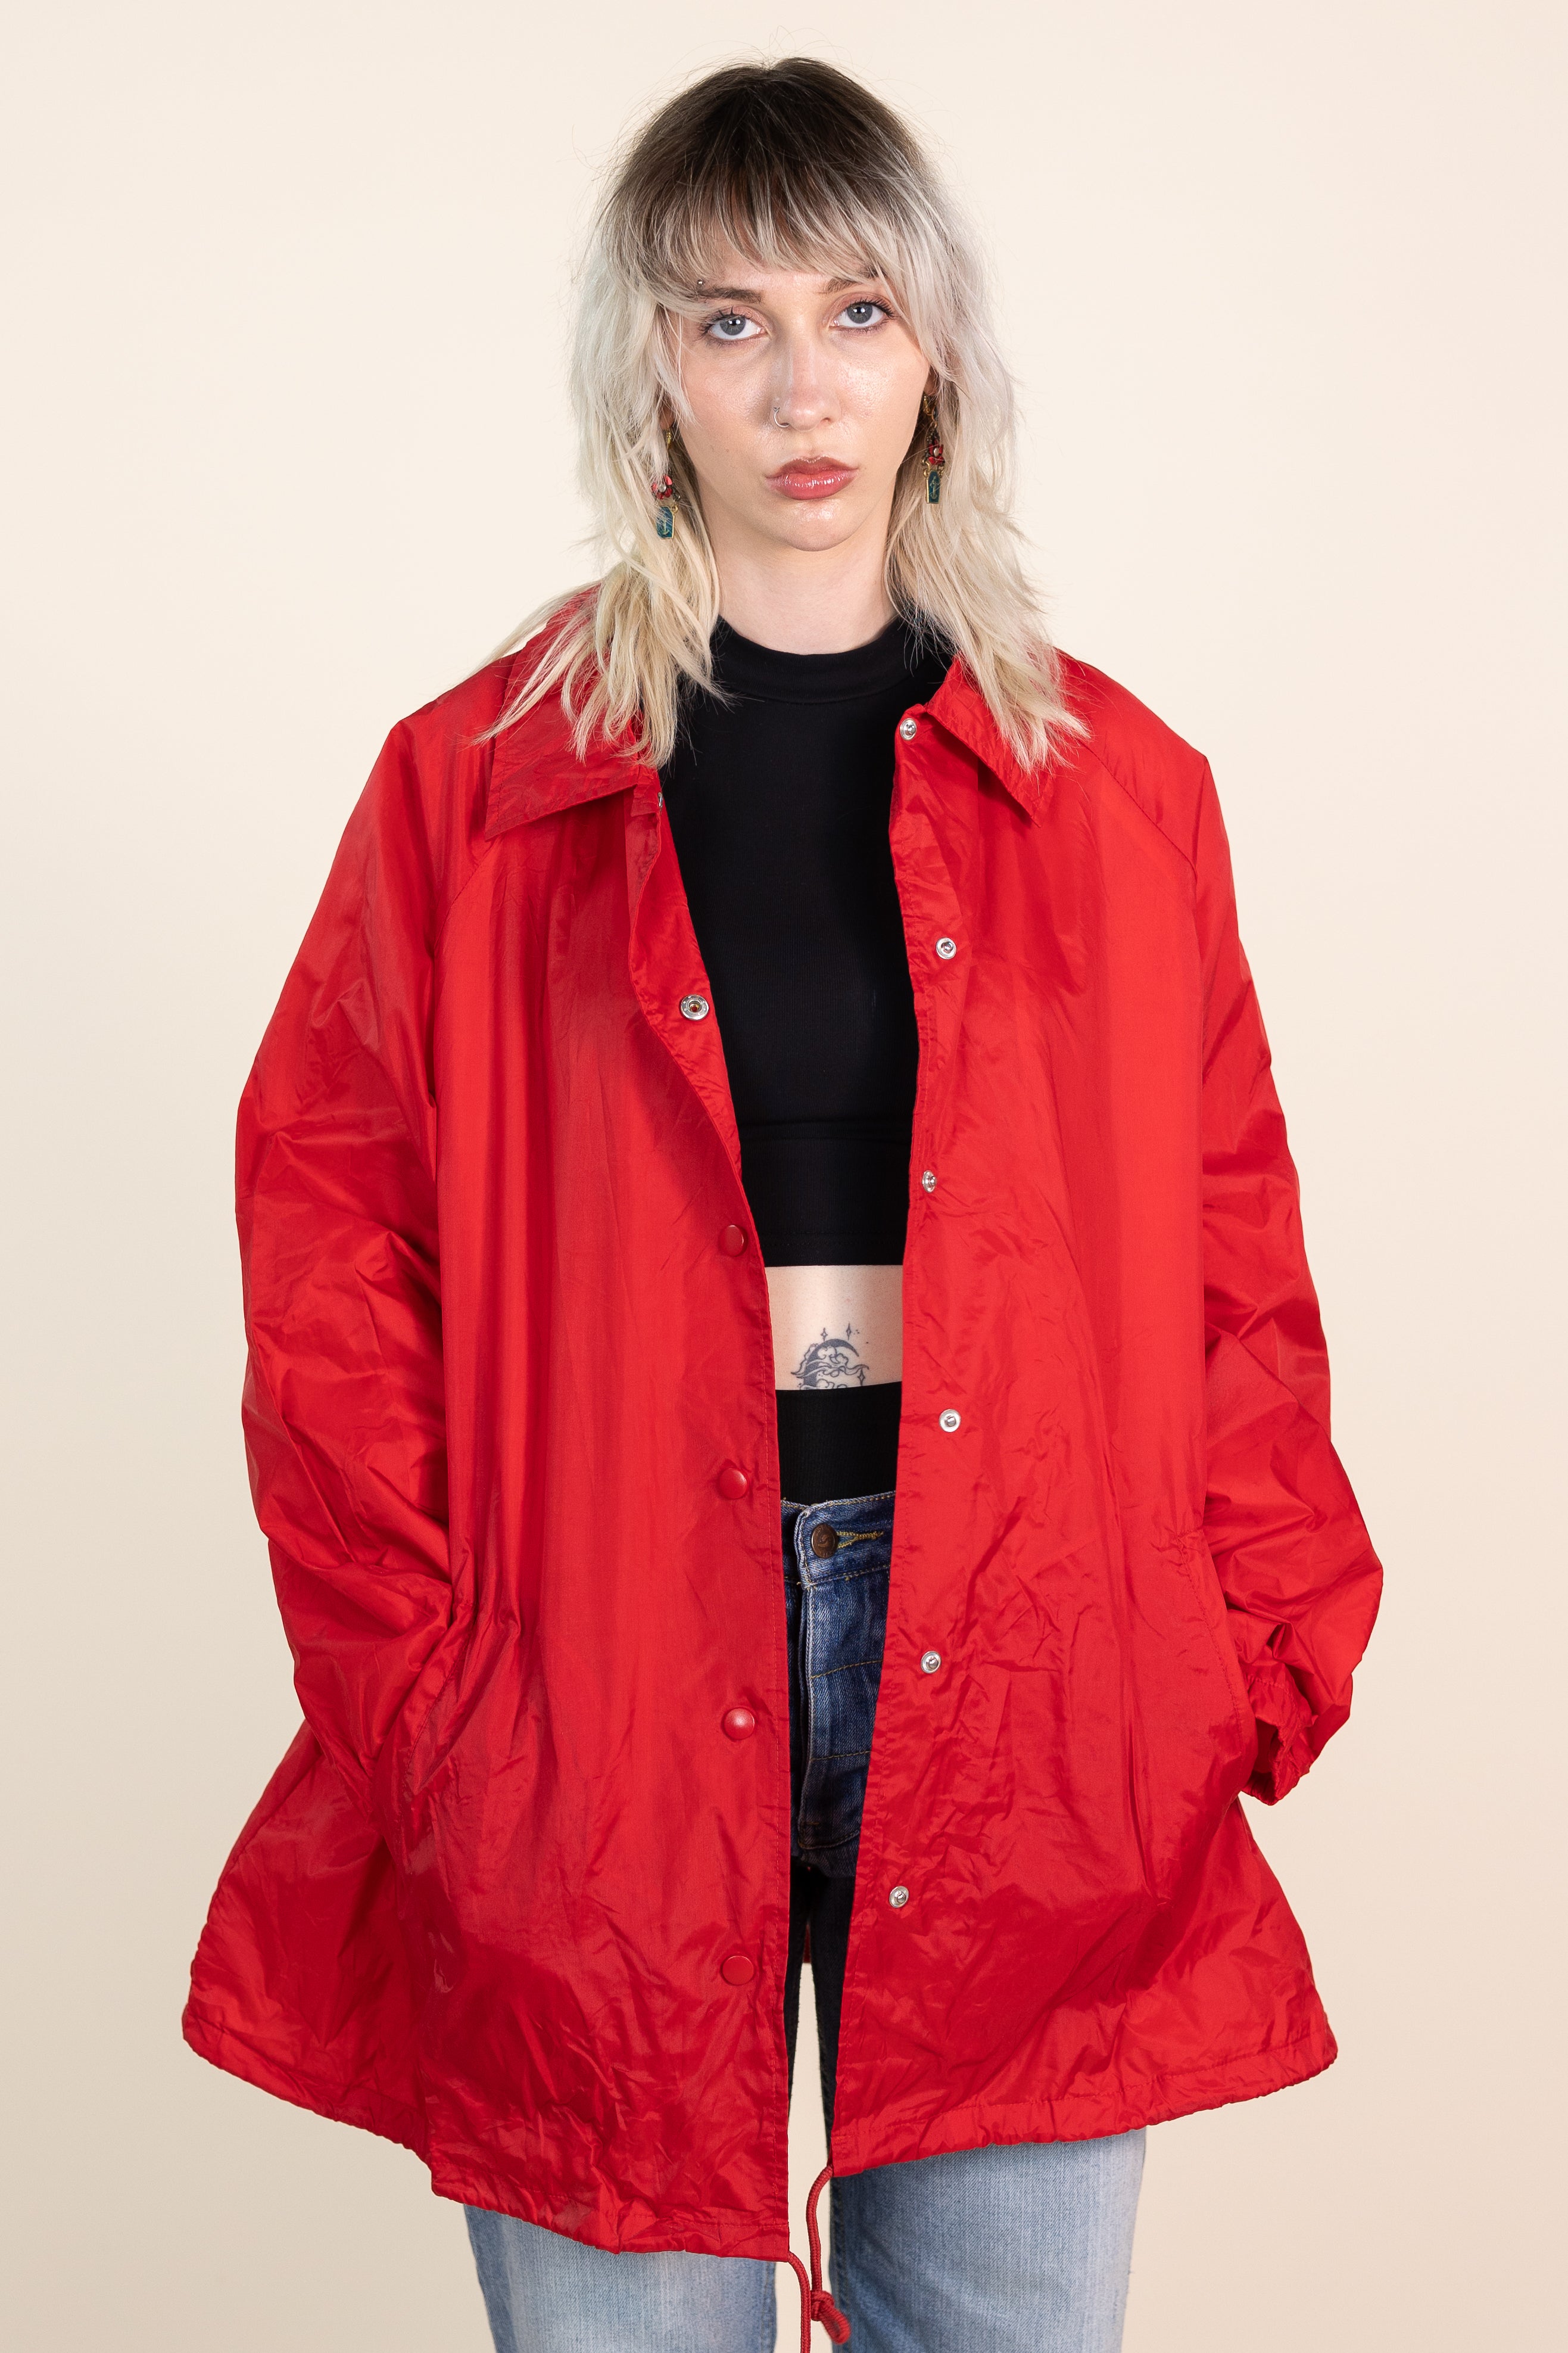 Red lightweight jacket